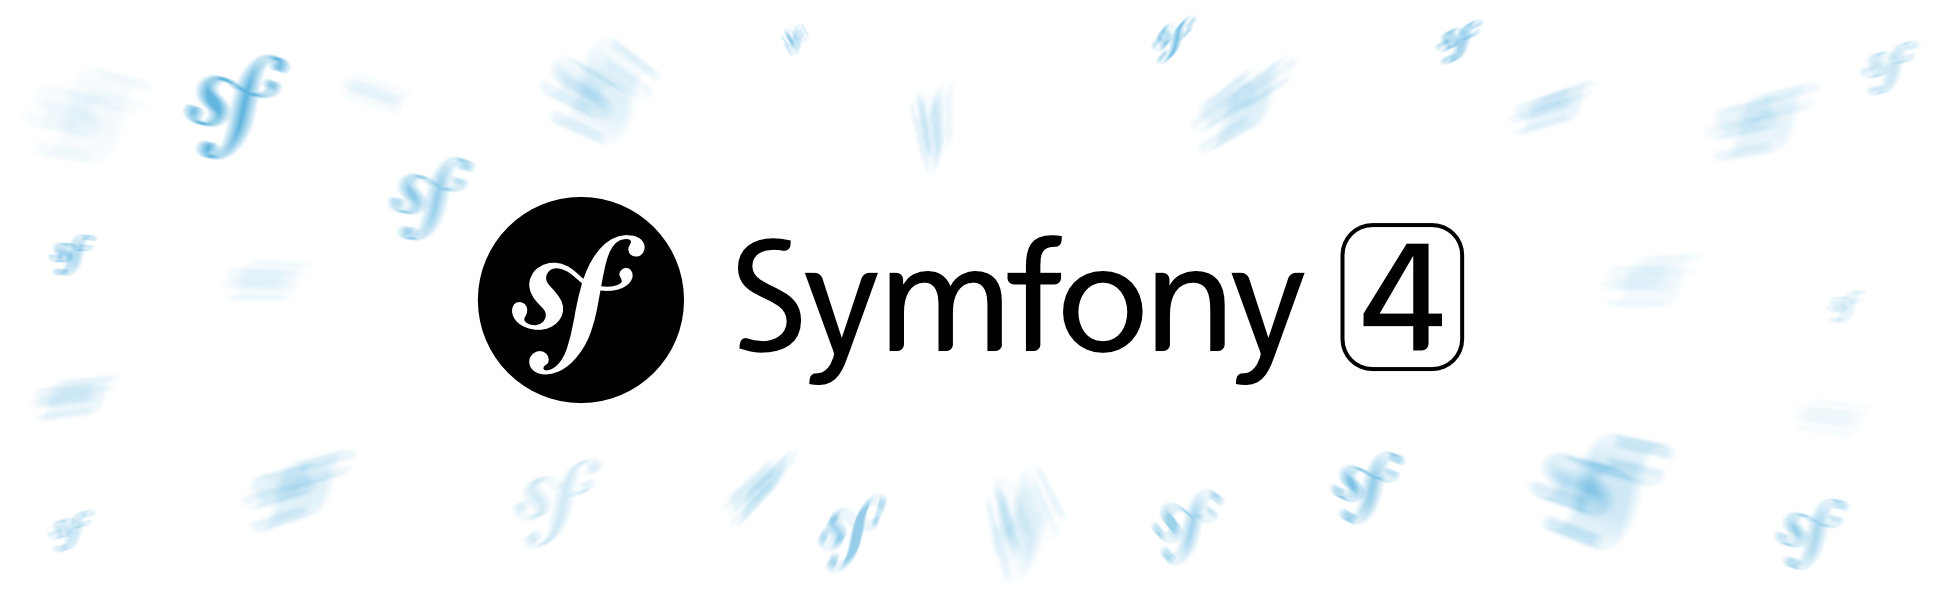 Resultado de imagen para symfony framework